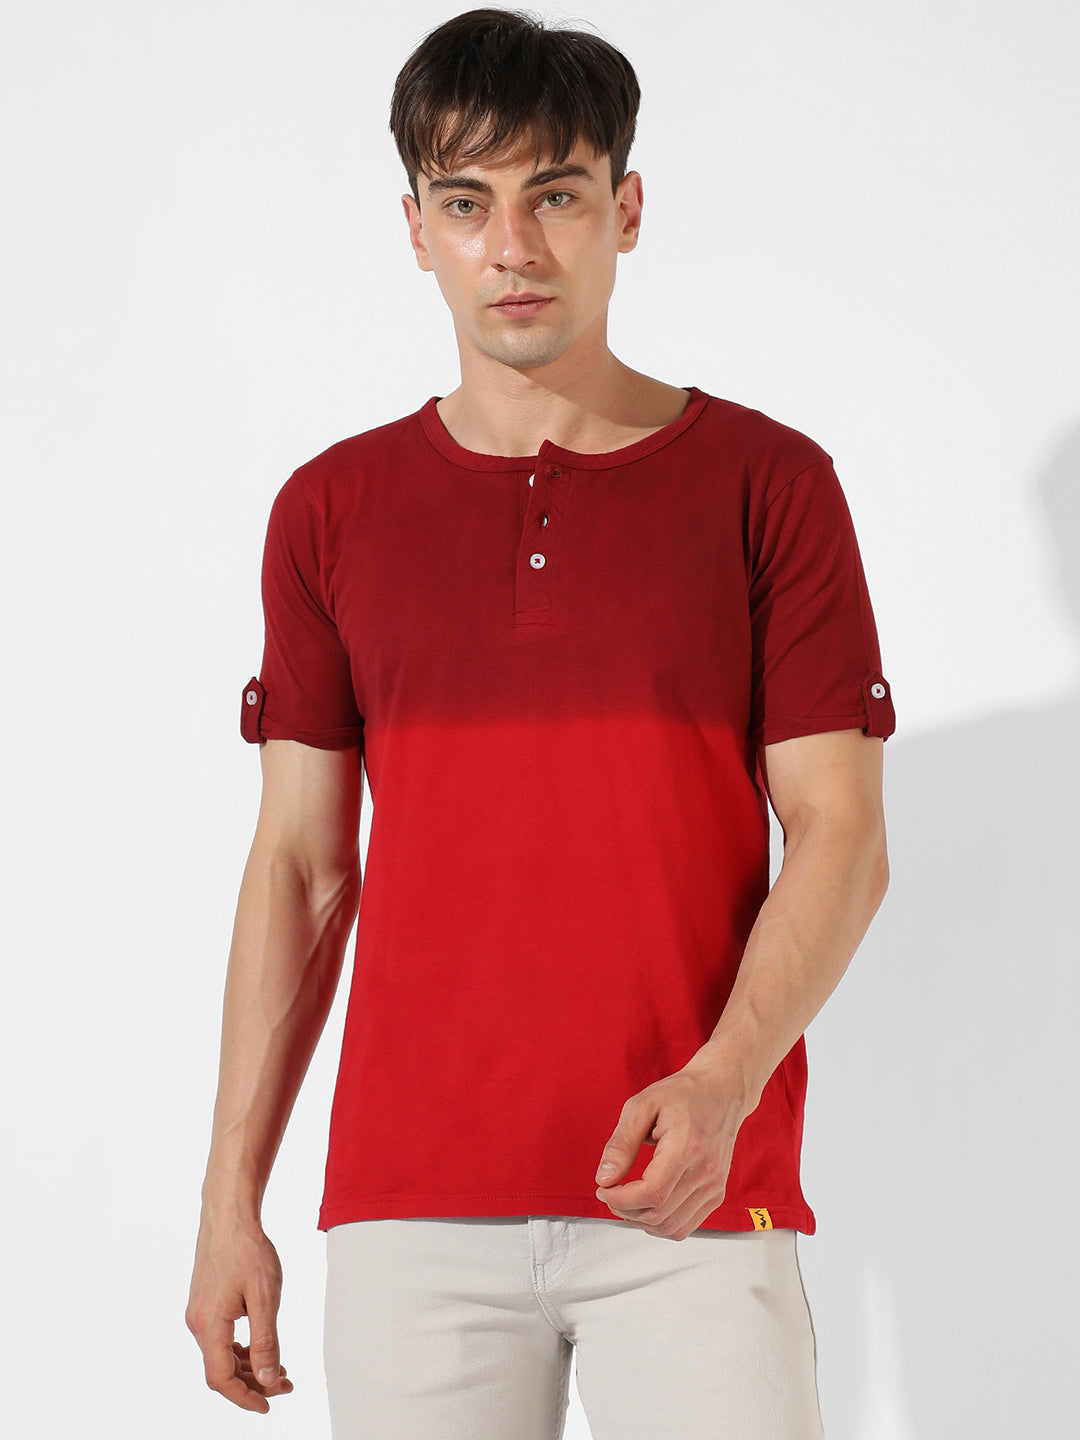 Colourblocked Casual T-Shirt